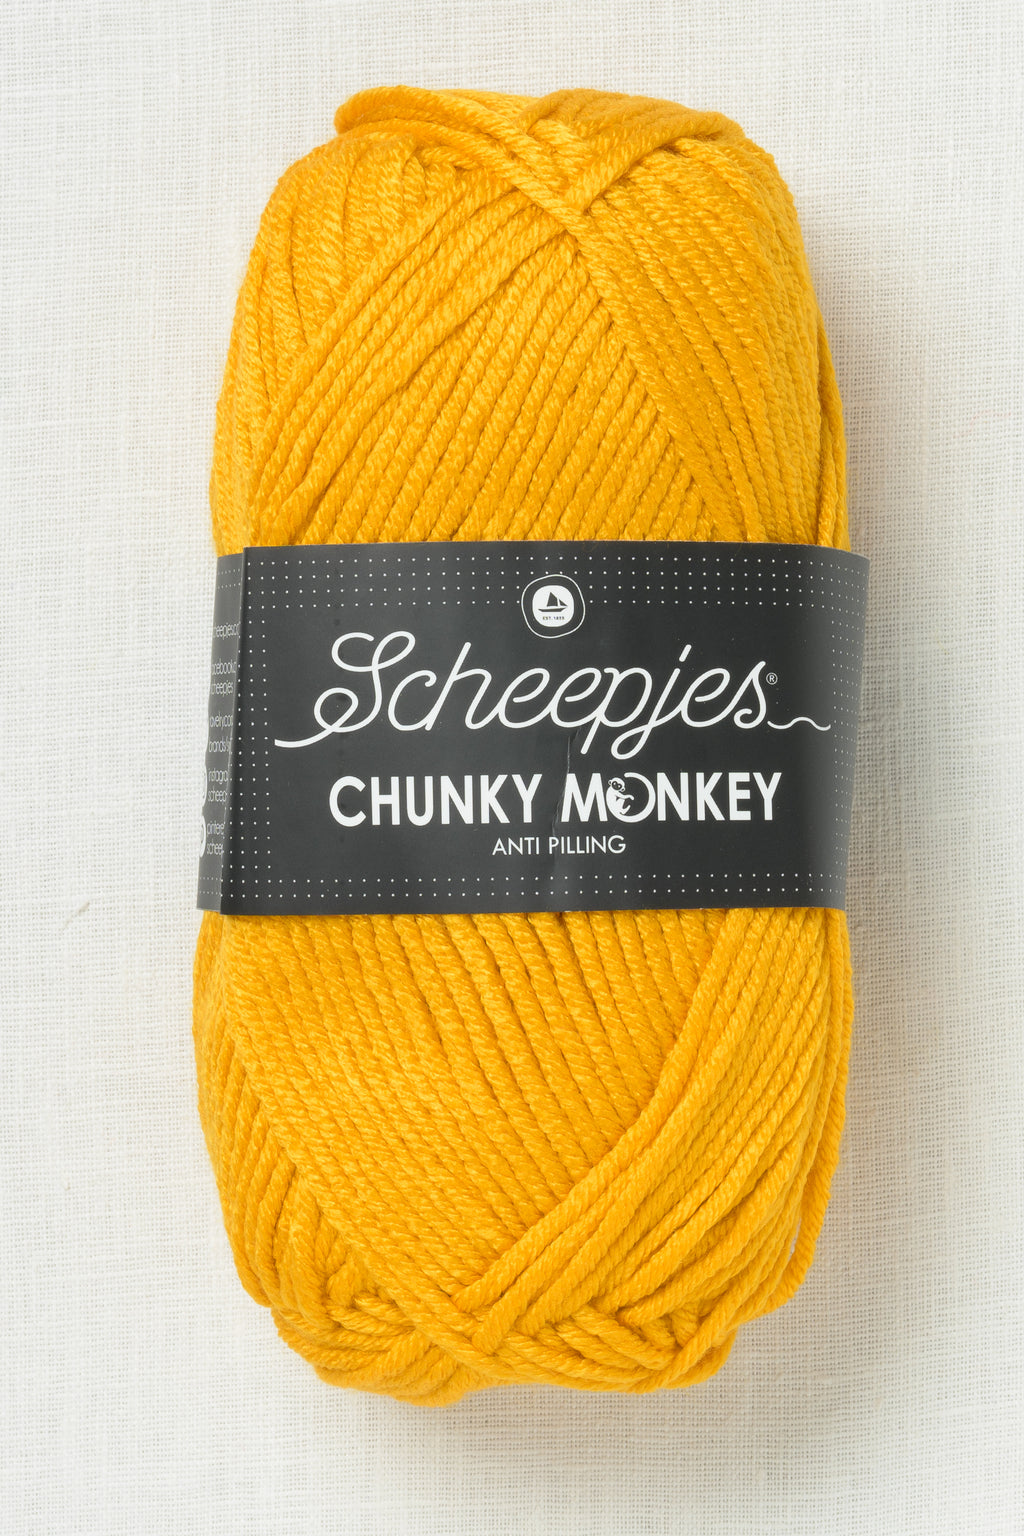 Scheepjes Chunky Monkey 1114 Golden Yellow